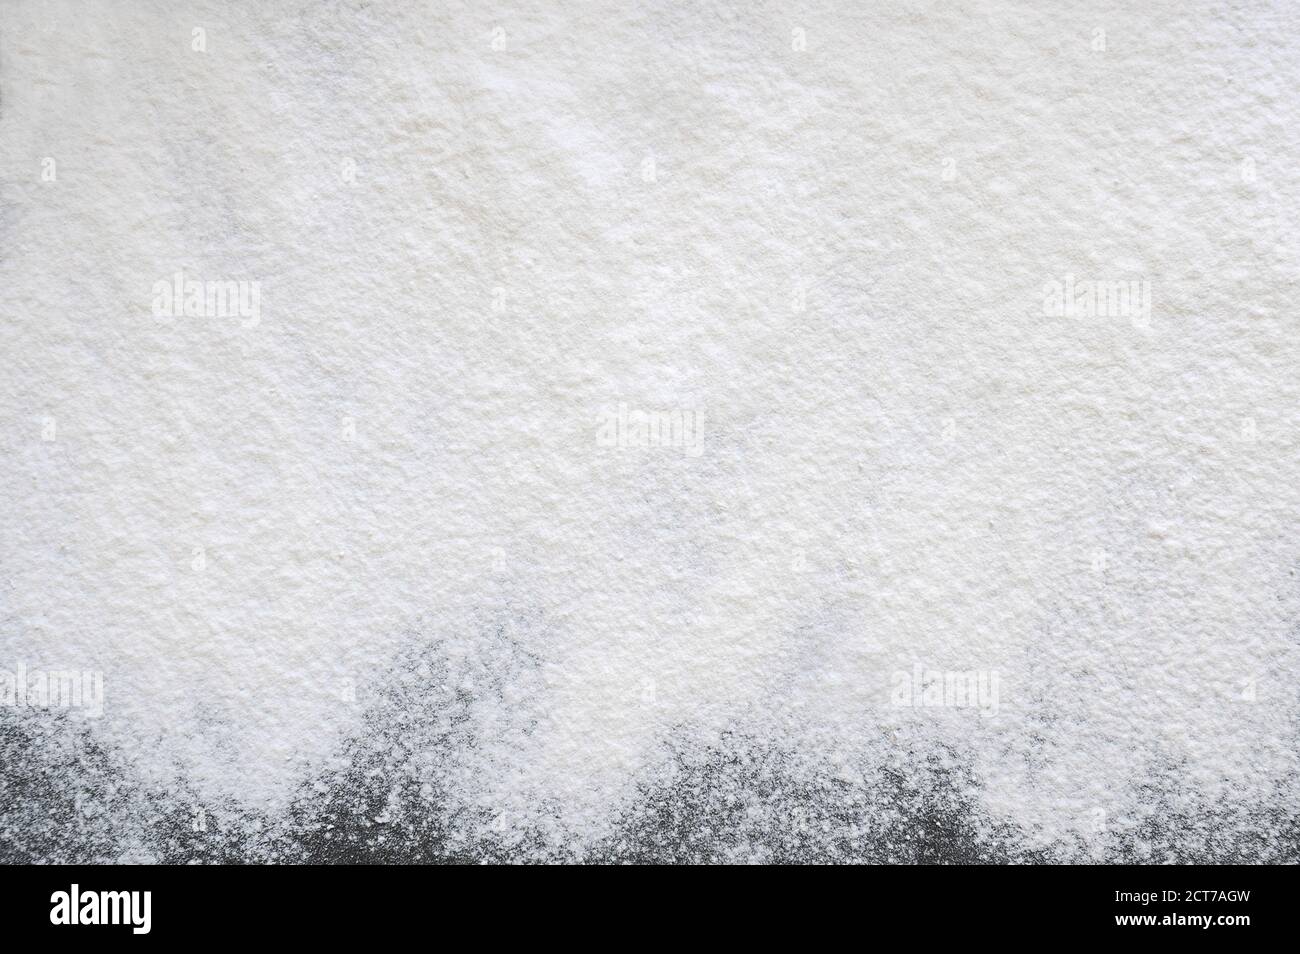 Wheat flour over gray background. Bakery. Food background. Horizontal orientation. Stock Photo